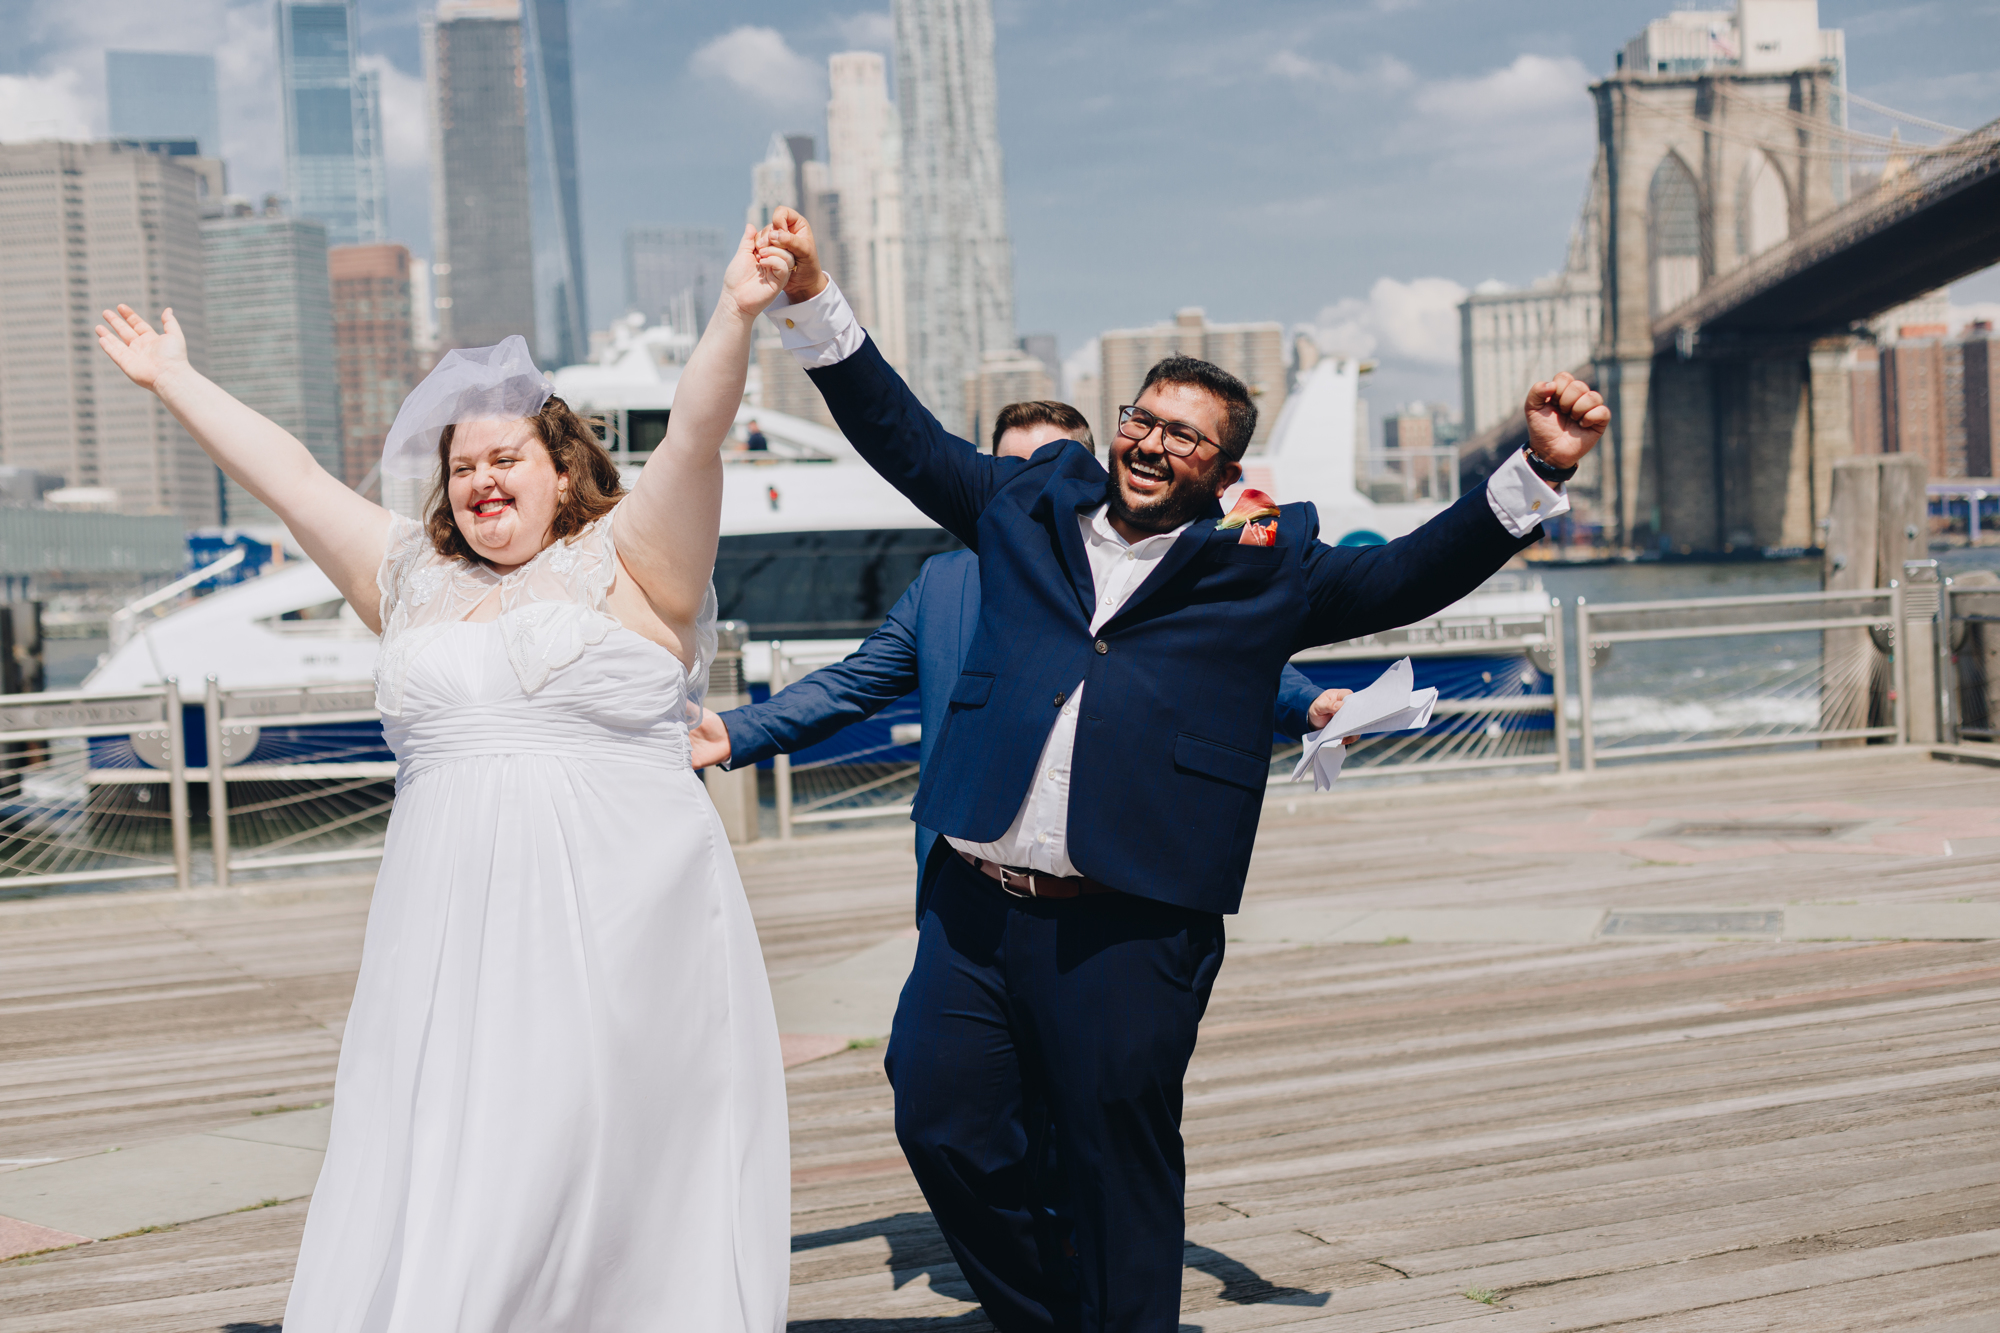 Candid Brooklyn Bridge Park wedding ceremony photos